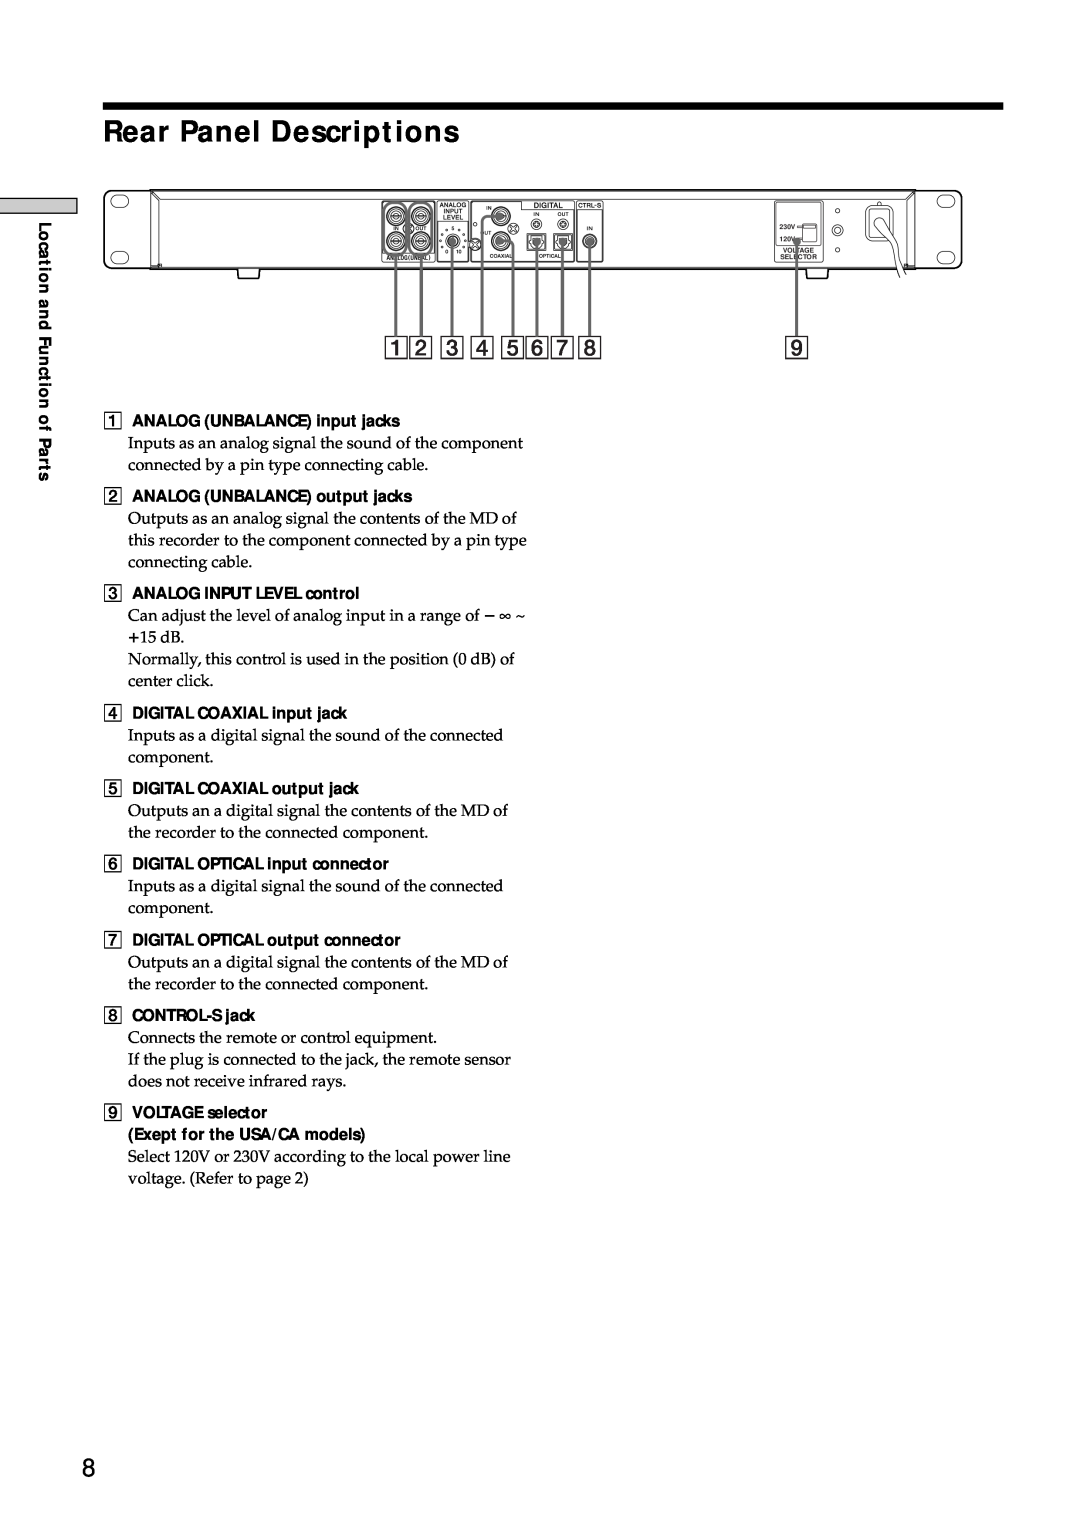 Sony MDS-E10 manual Rear Panel Descriptions, 12 34 